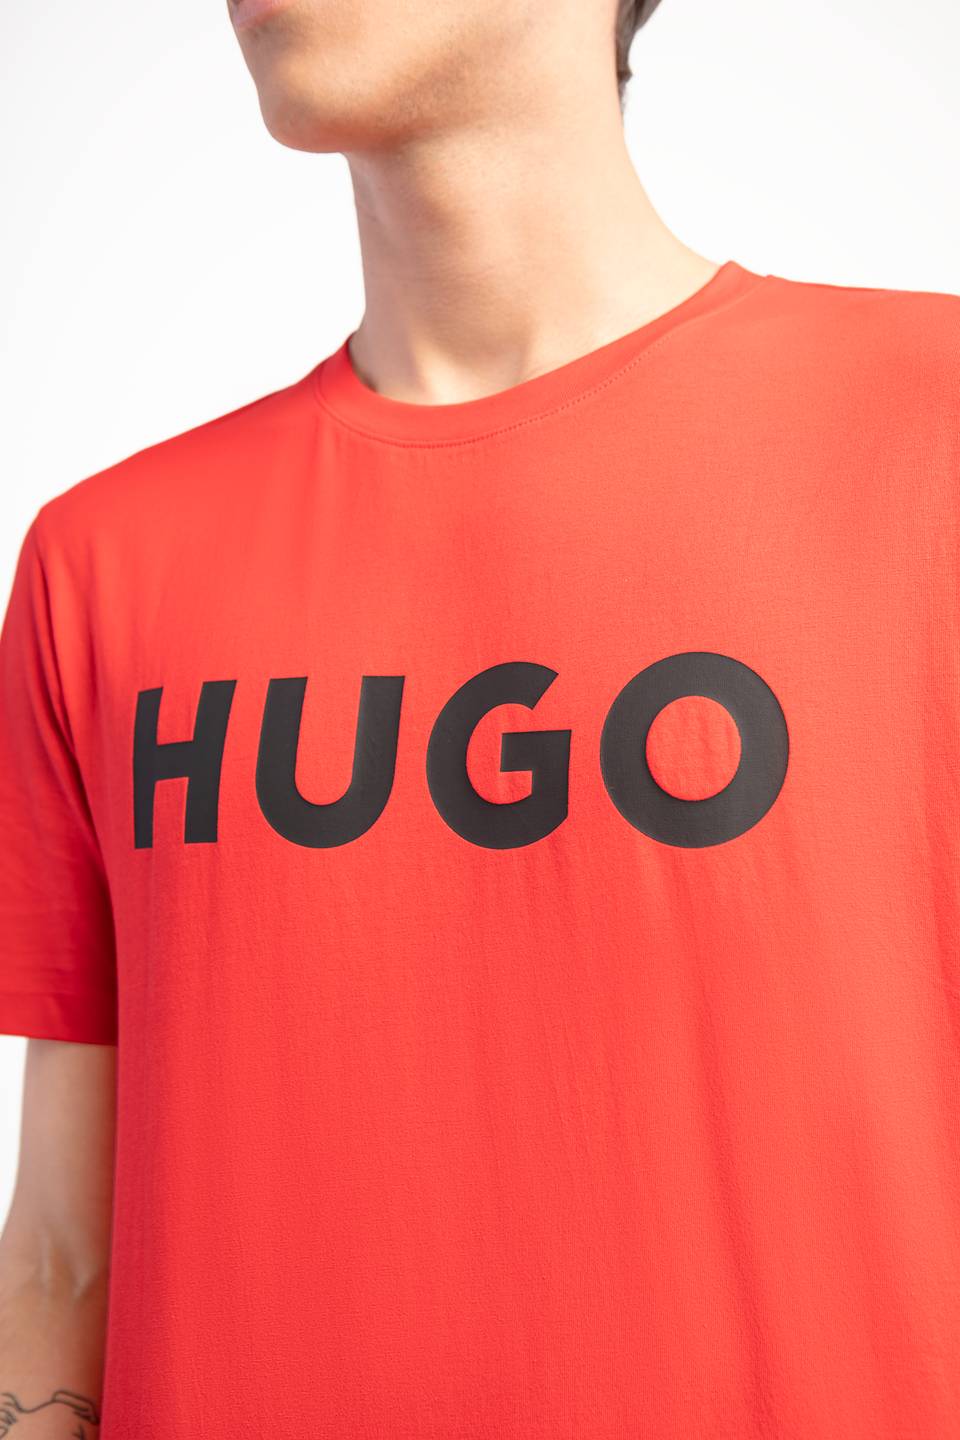 Koszulka Hugo Boss Jersey Dulivio 10229761 01 50467556-694